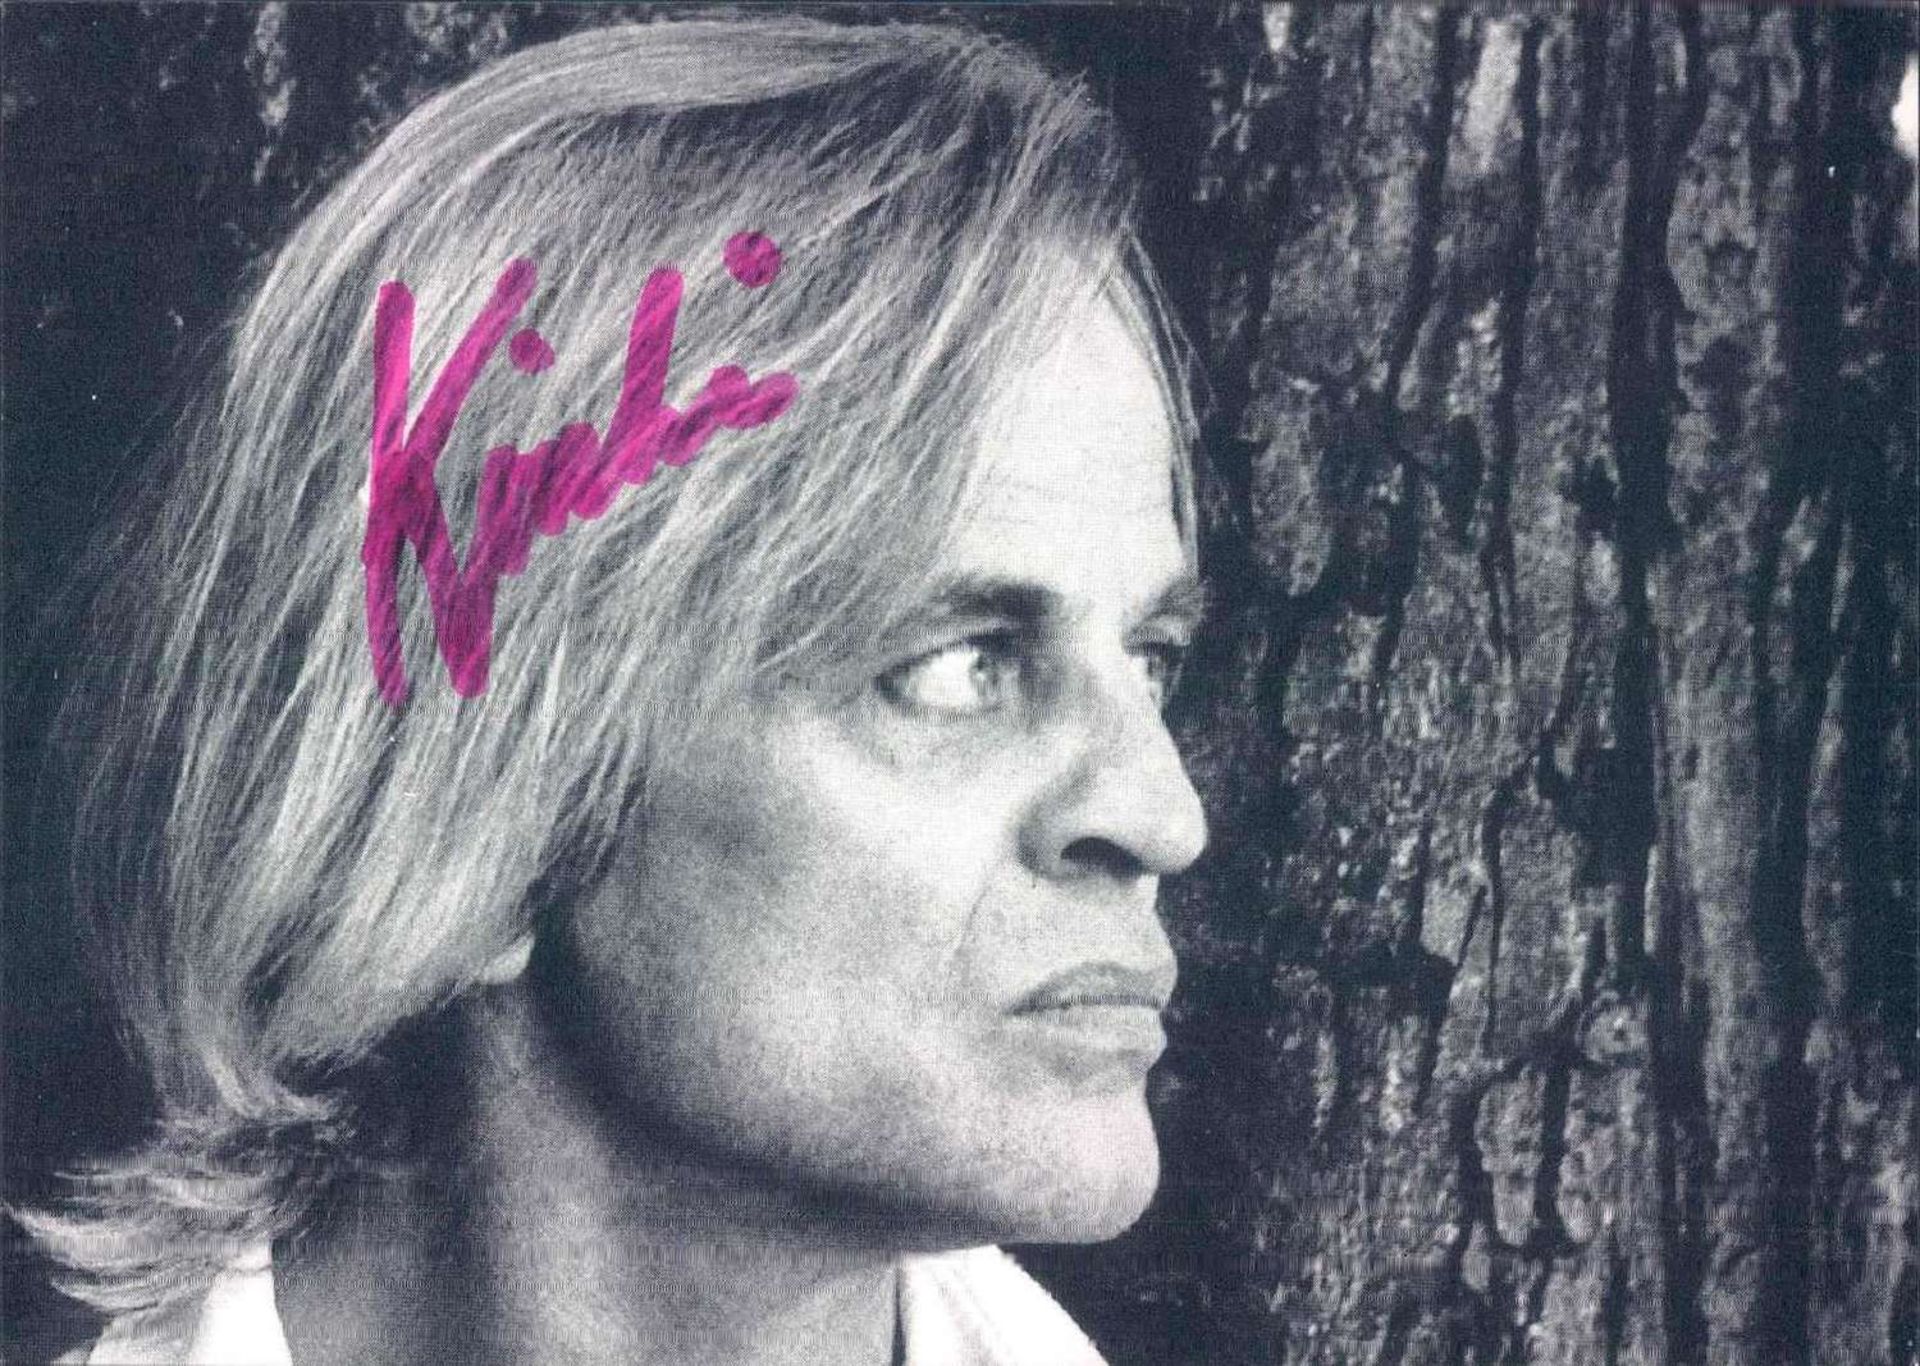 Autogramm - Post - Karte Klaus Kinski. Original Signatur.Autograph - Post Card Klaus Kinski.